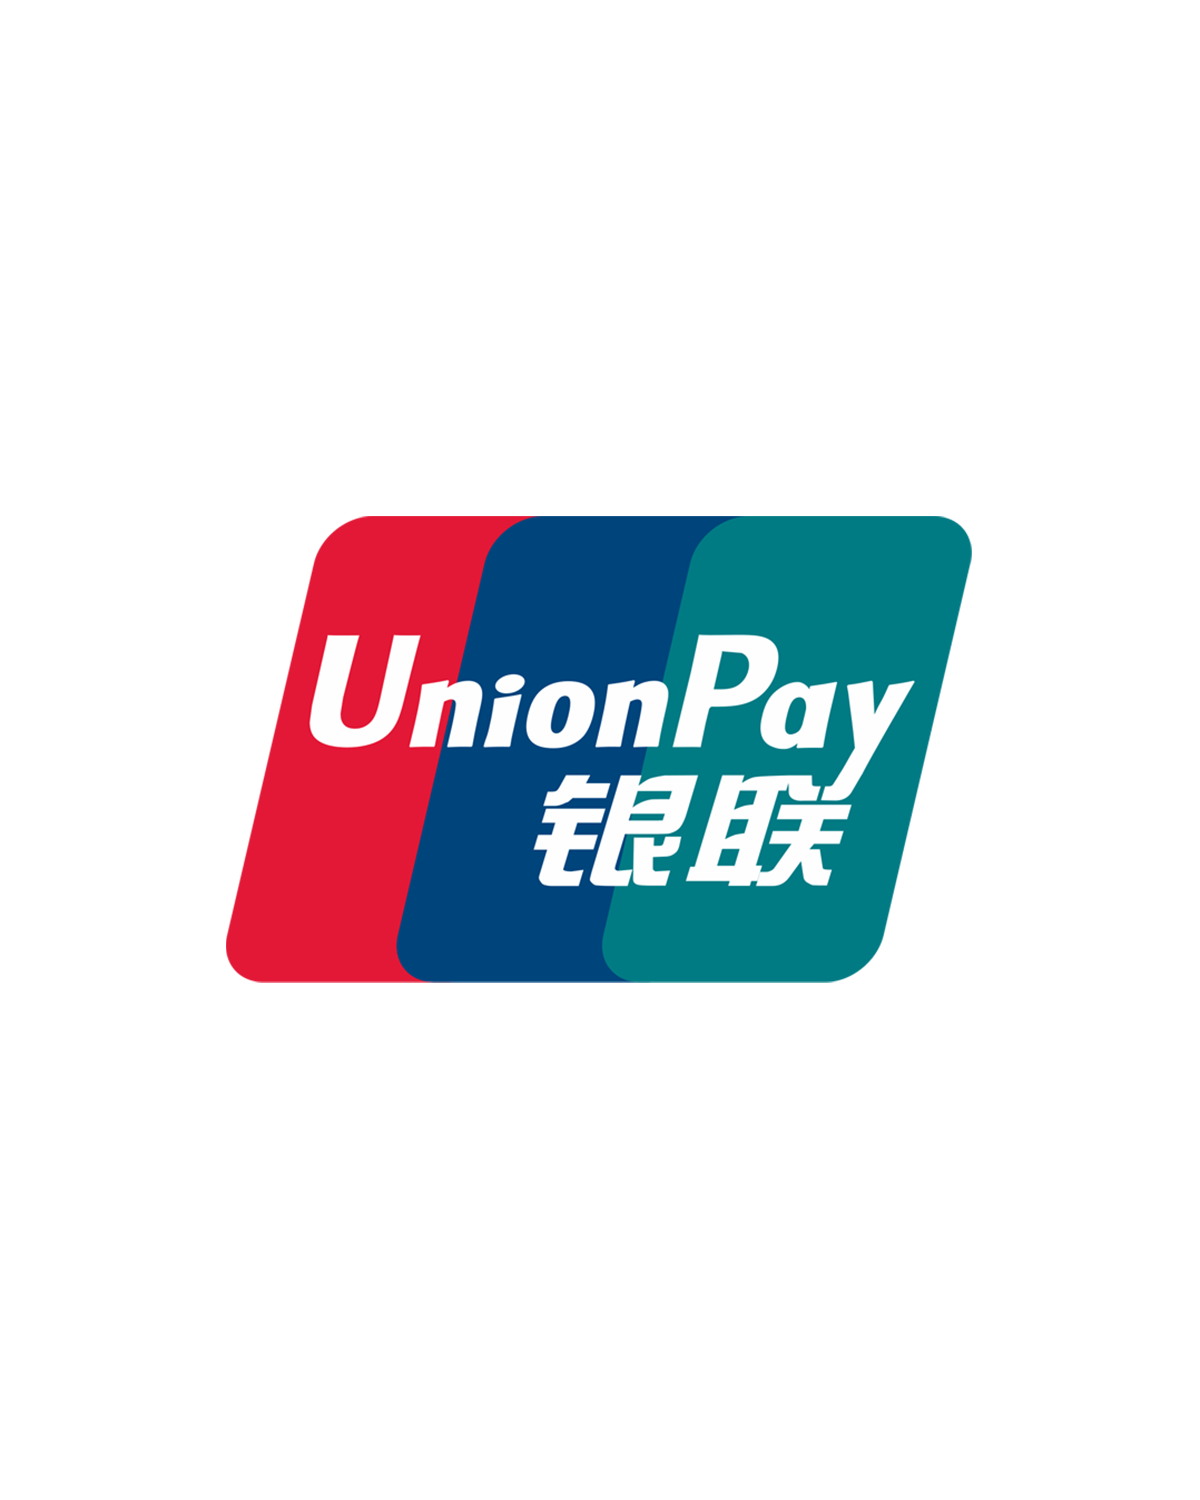 Юнипэй. Unionpay логотип. China Unionpay карта. Union pay лого. Union pay лого без фона.